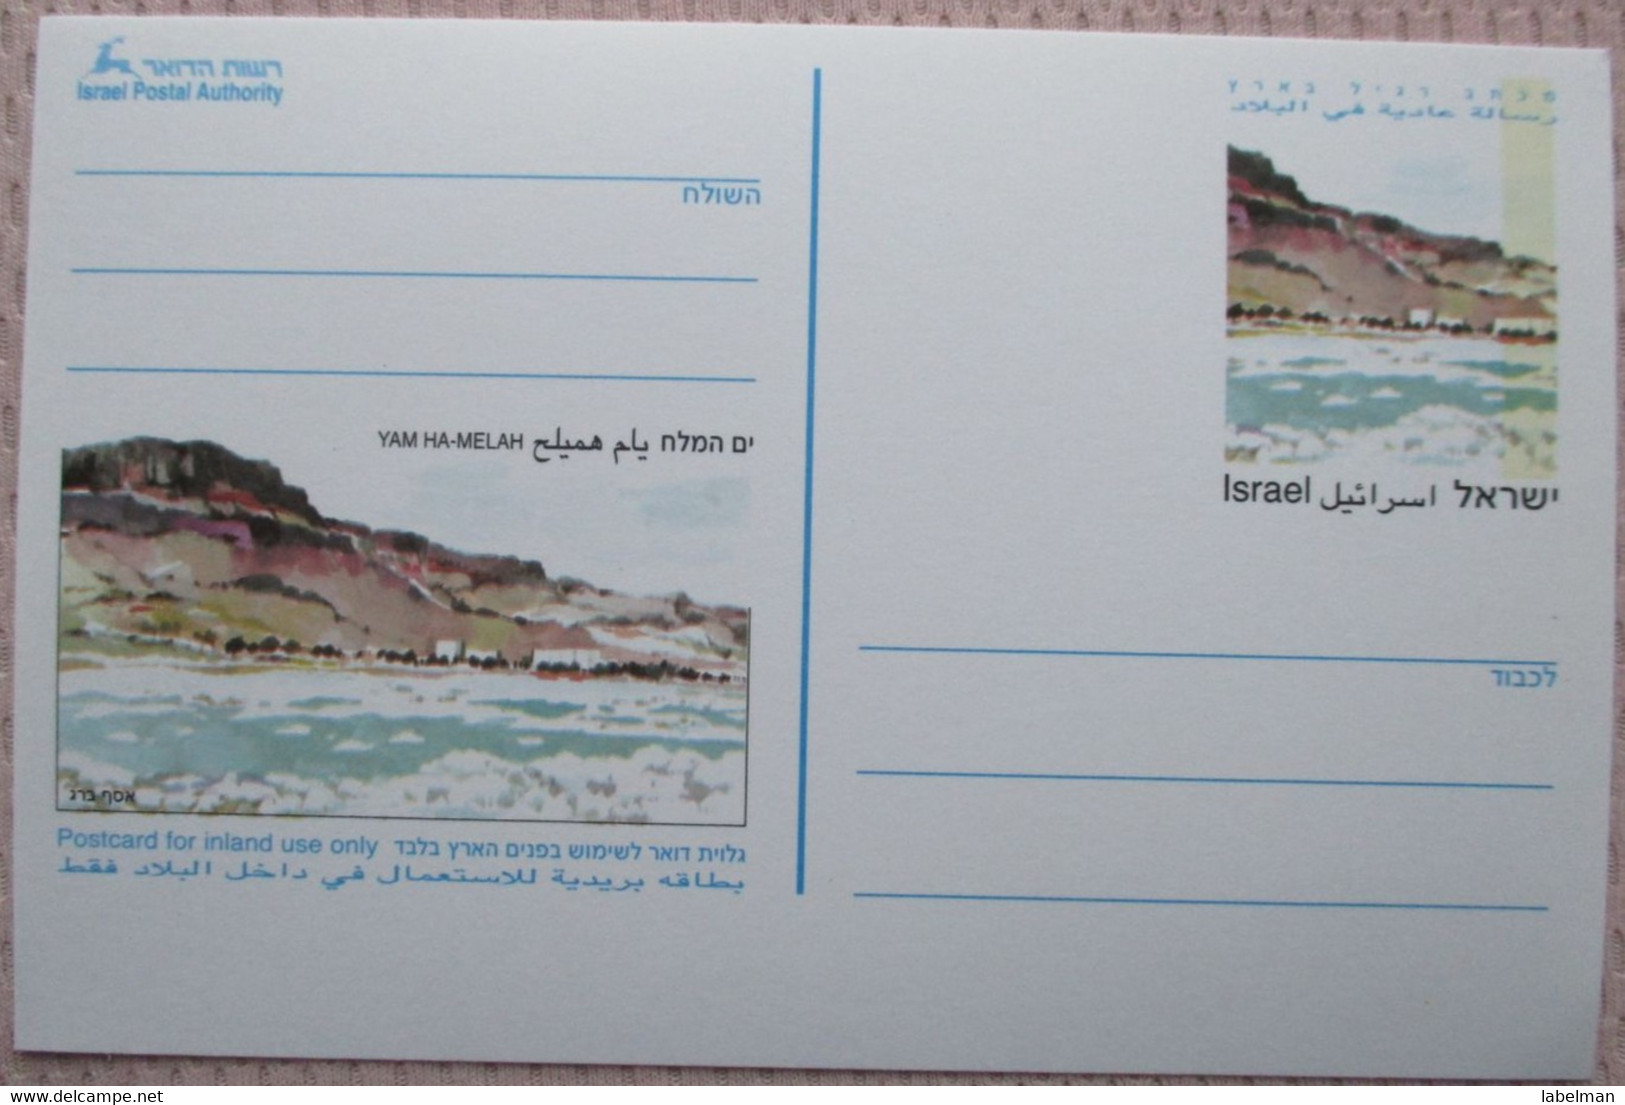 ISRAEL POSTAL AUTHORITY DEAD SEA DESERT INLAND PREPAID POSTCARD POSTKARTE CARD ANSICHTSKARTE CARTOLINA CARTE POSTALE PC - Tarjetas – Máxima